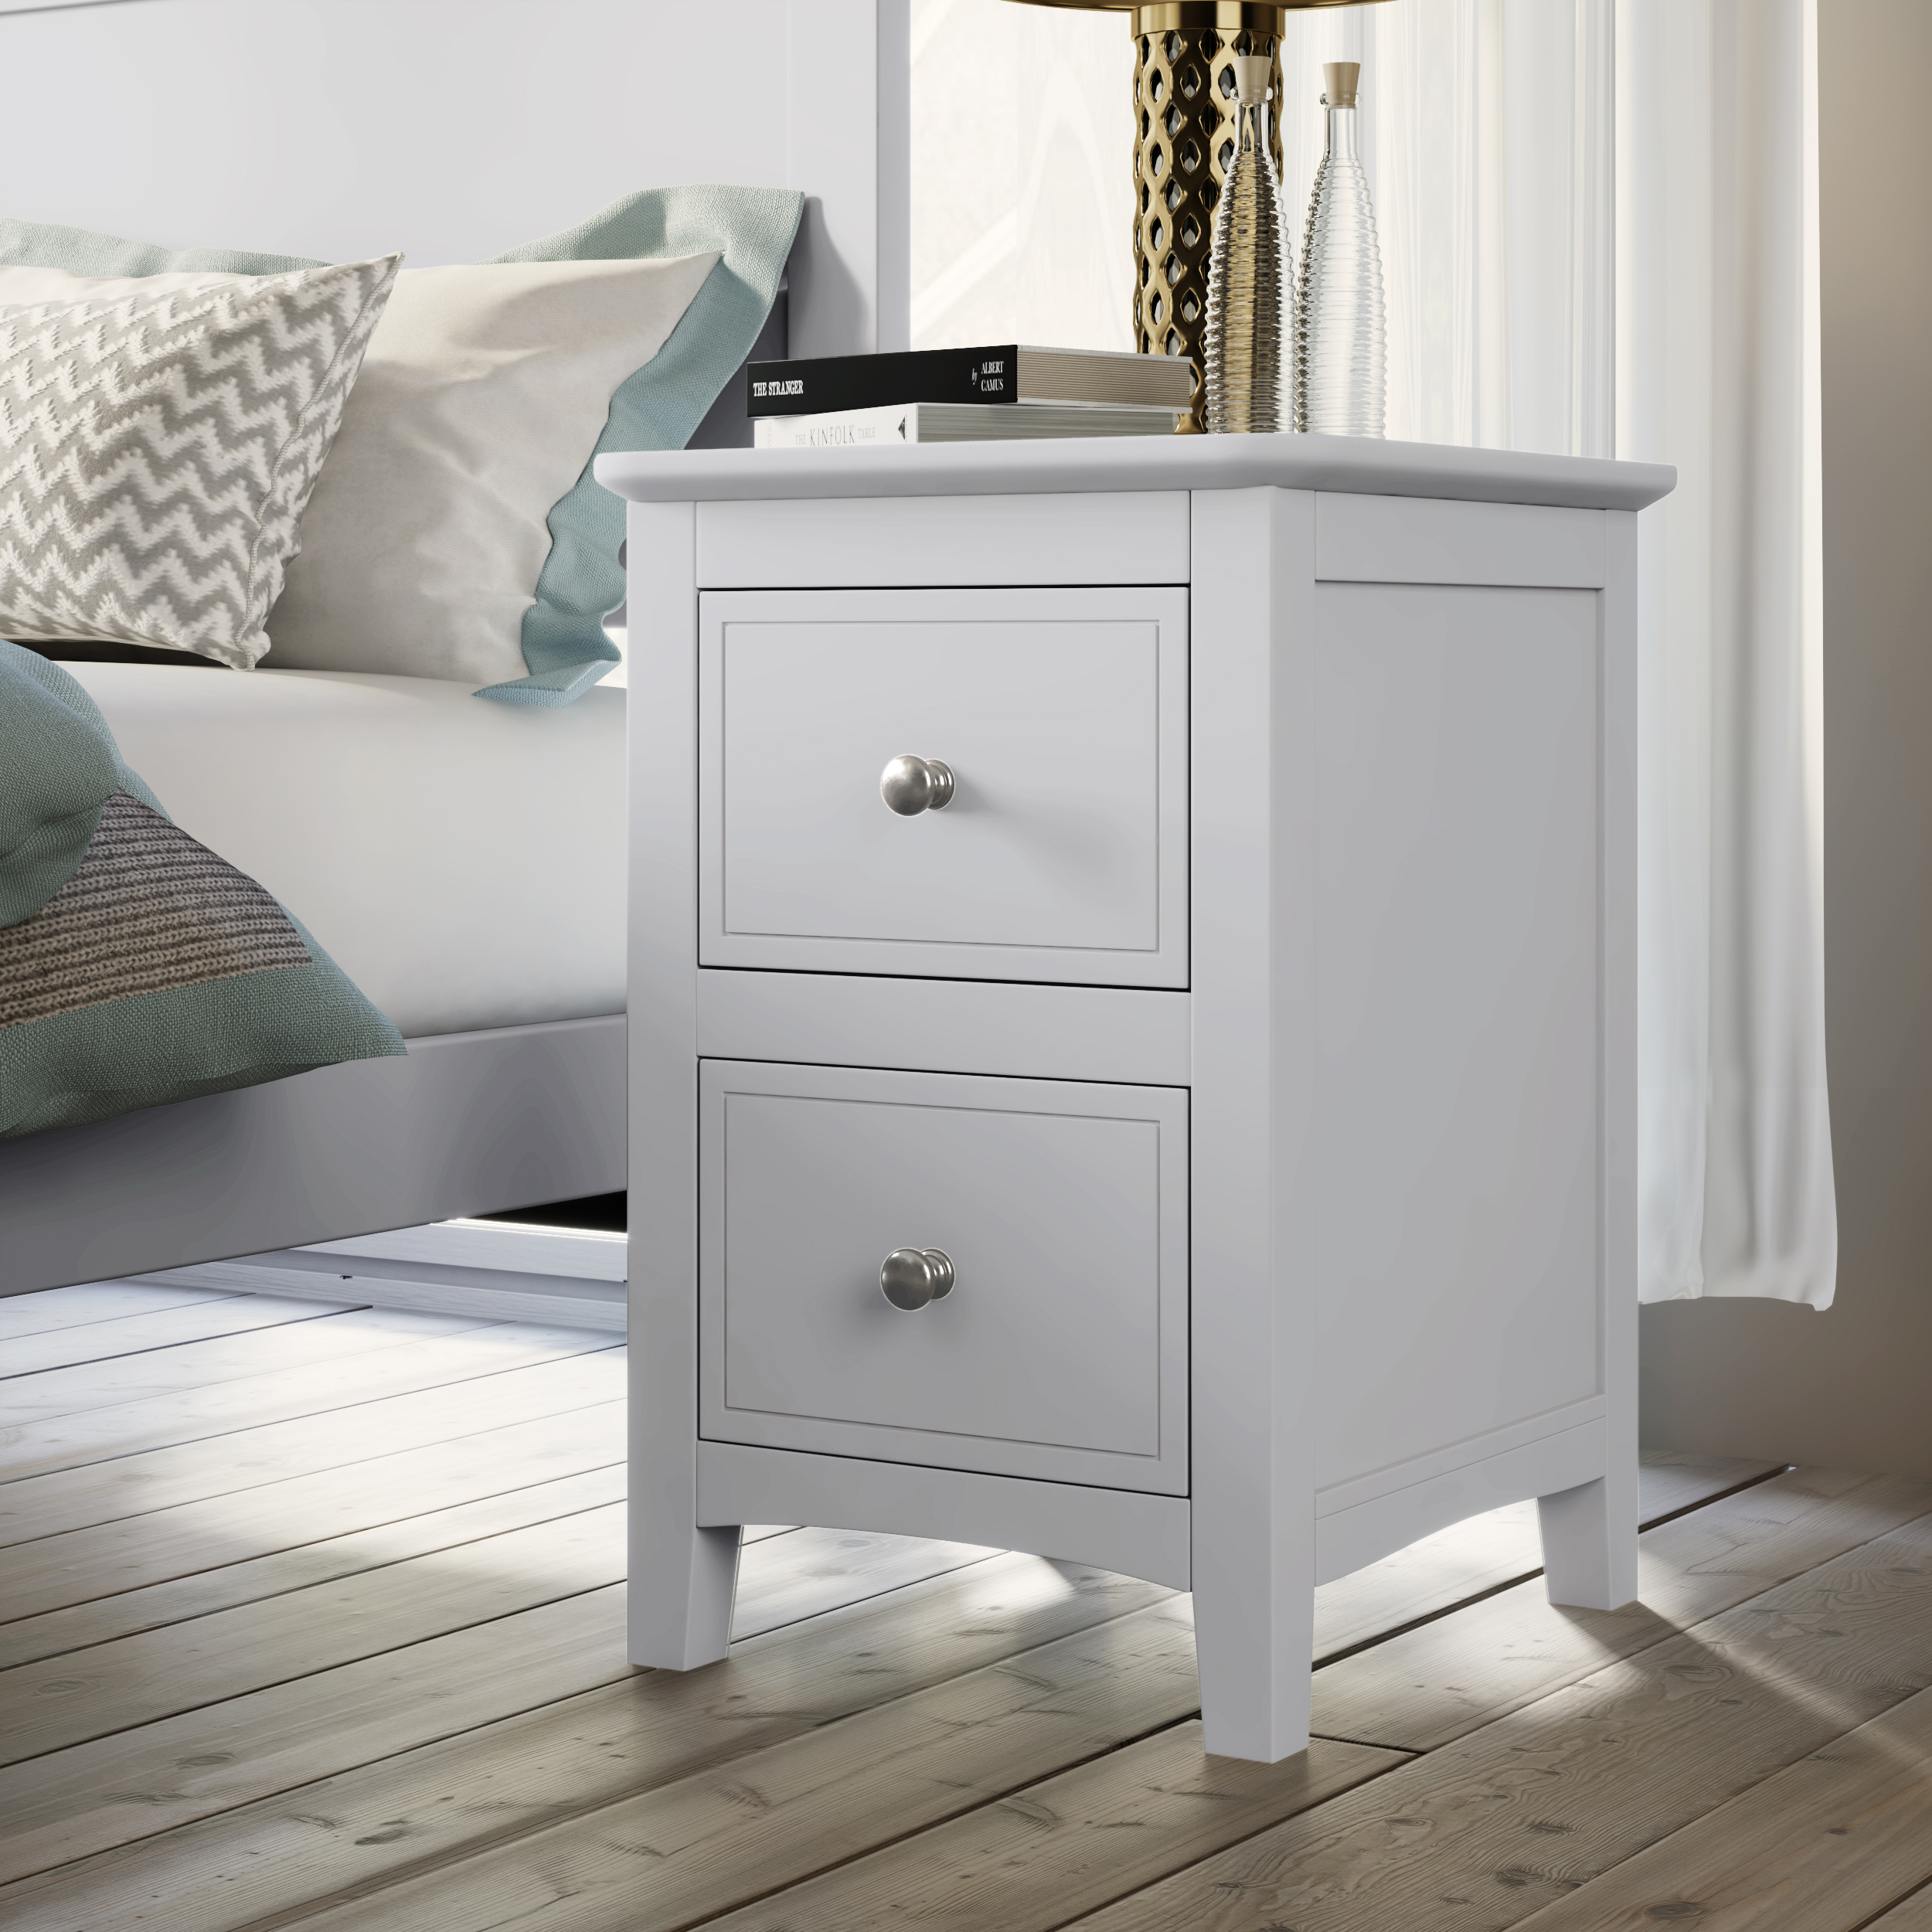 Details about   Set of 2 Elegant Solid Wood Nightstand Drawer End Table Bedside Cabinet White 